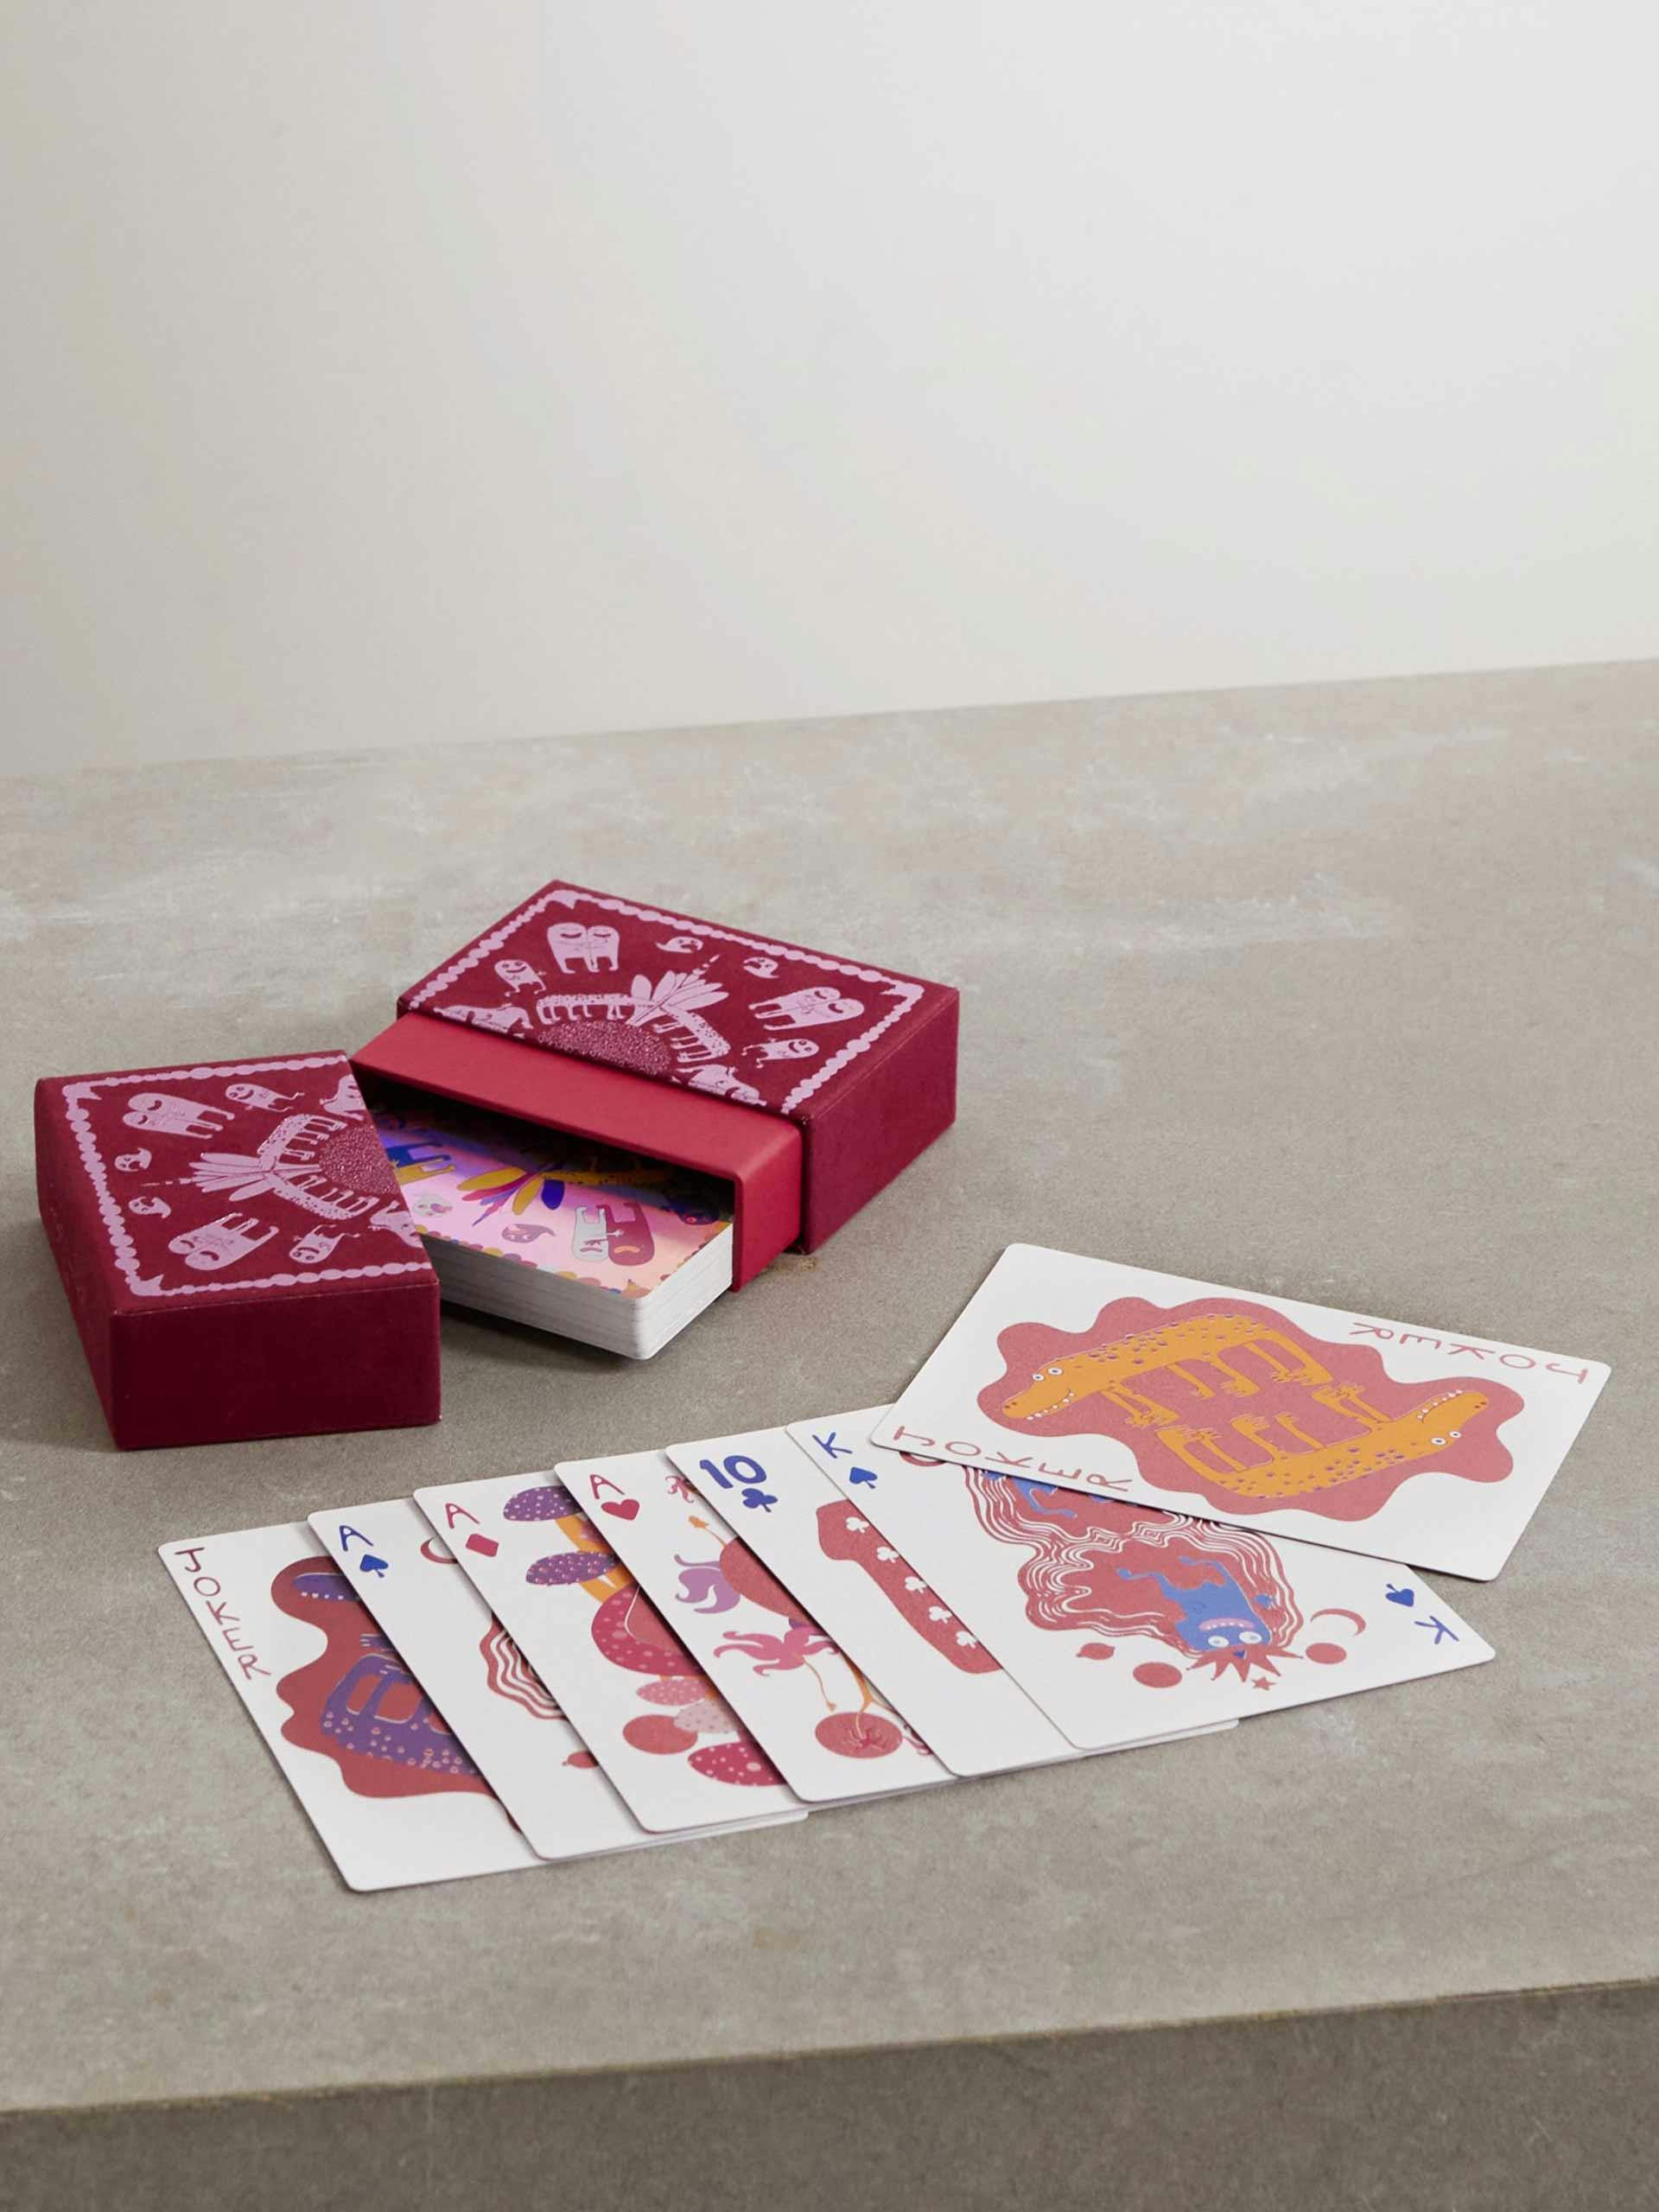 Jumbo playing cards in a velvet box